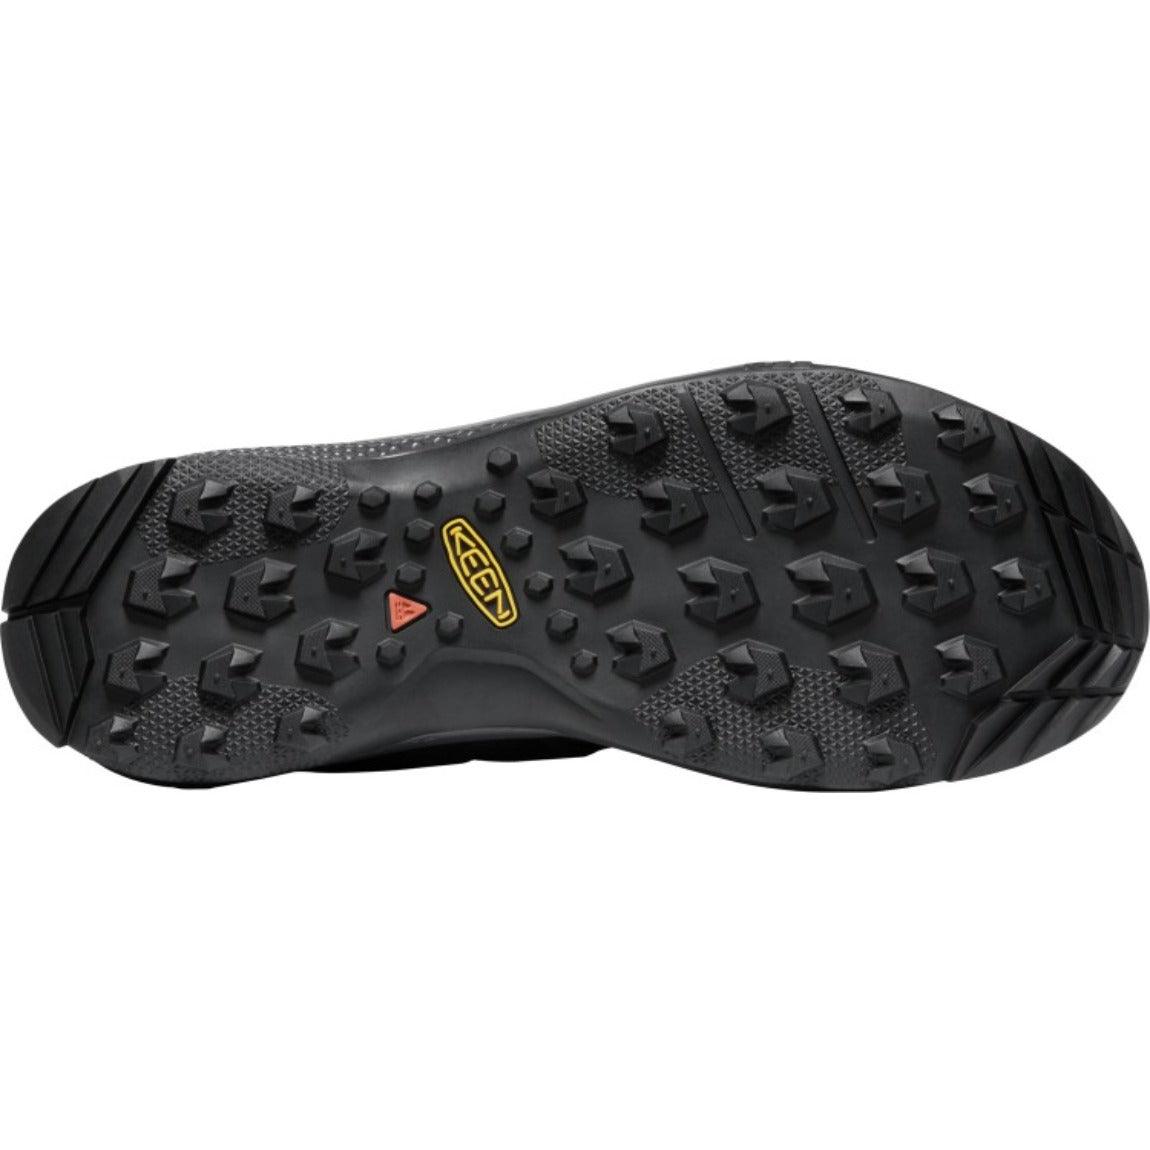 Explore Waterproof Shoes - Men's - Sports Excellence